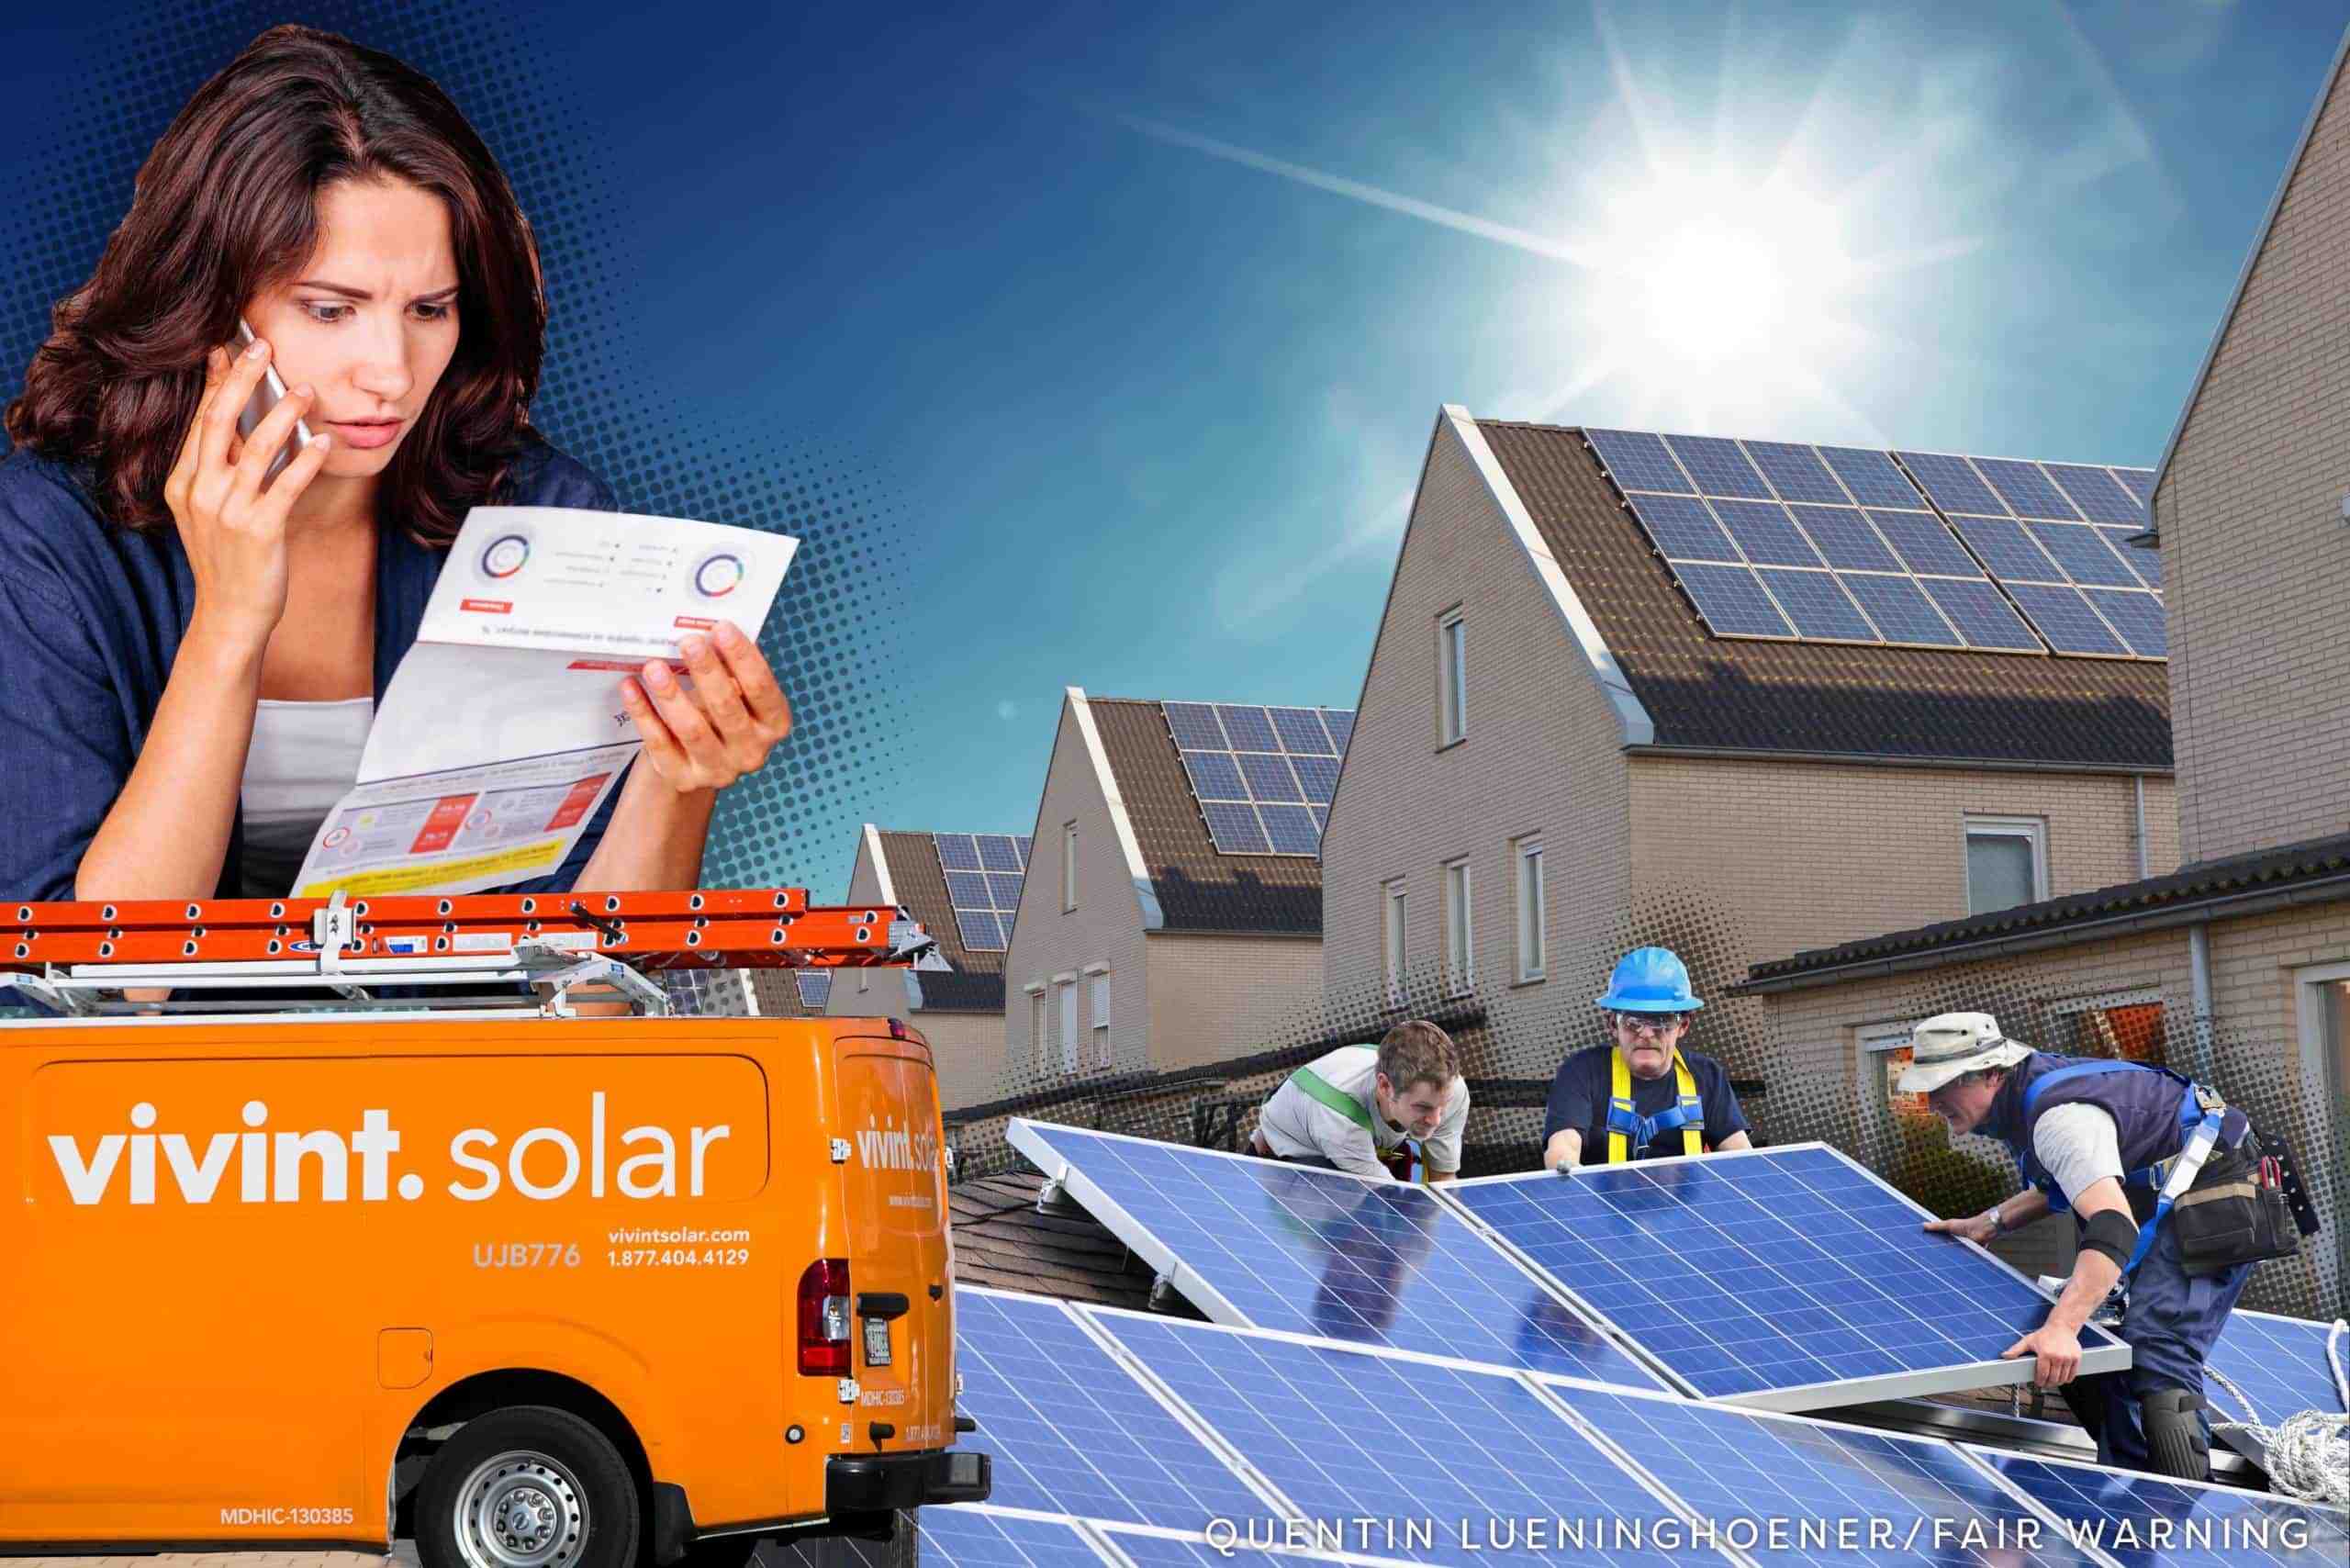 Do electricians work on solar?